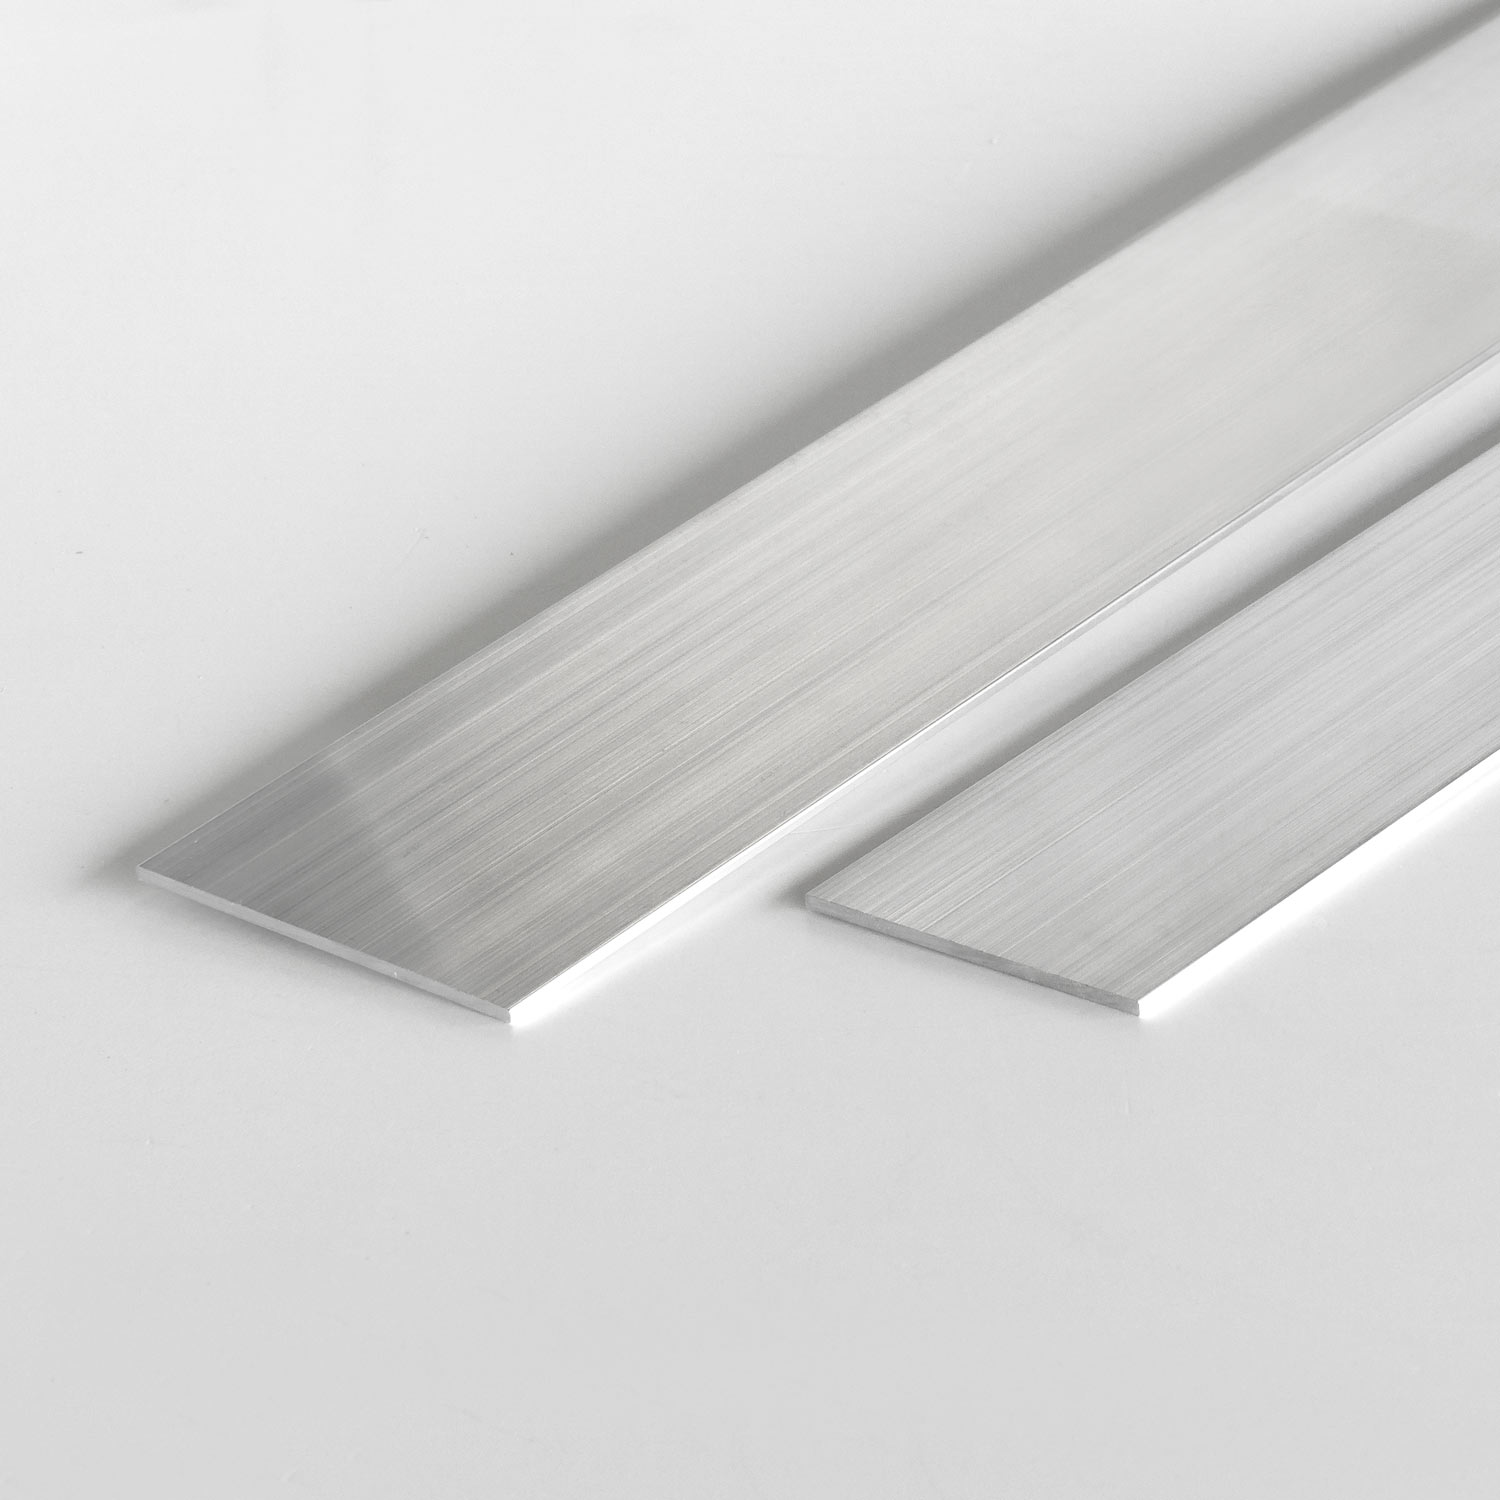 Aluminium Flach Profil Alu Flachstange Flachmaterial Aluprofil Stange 